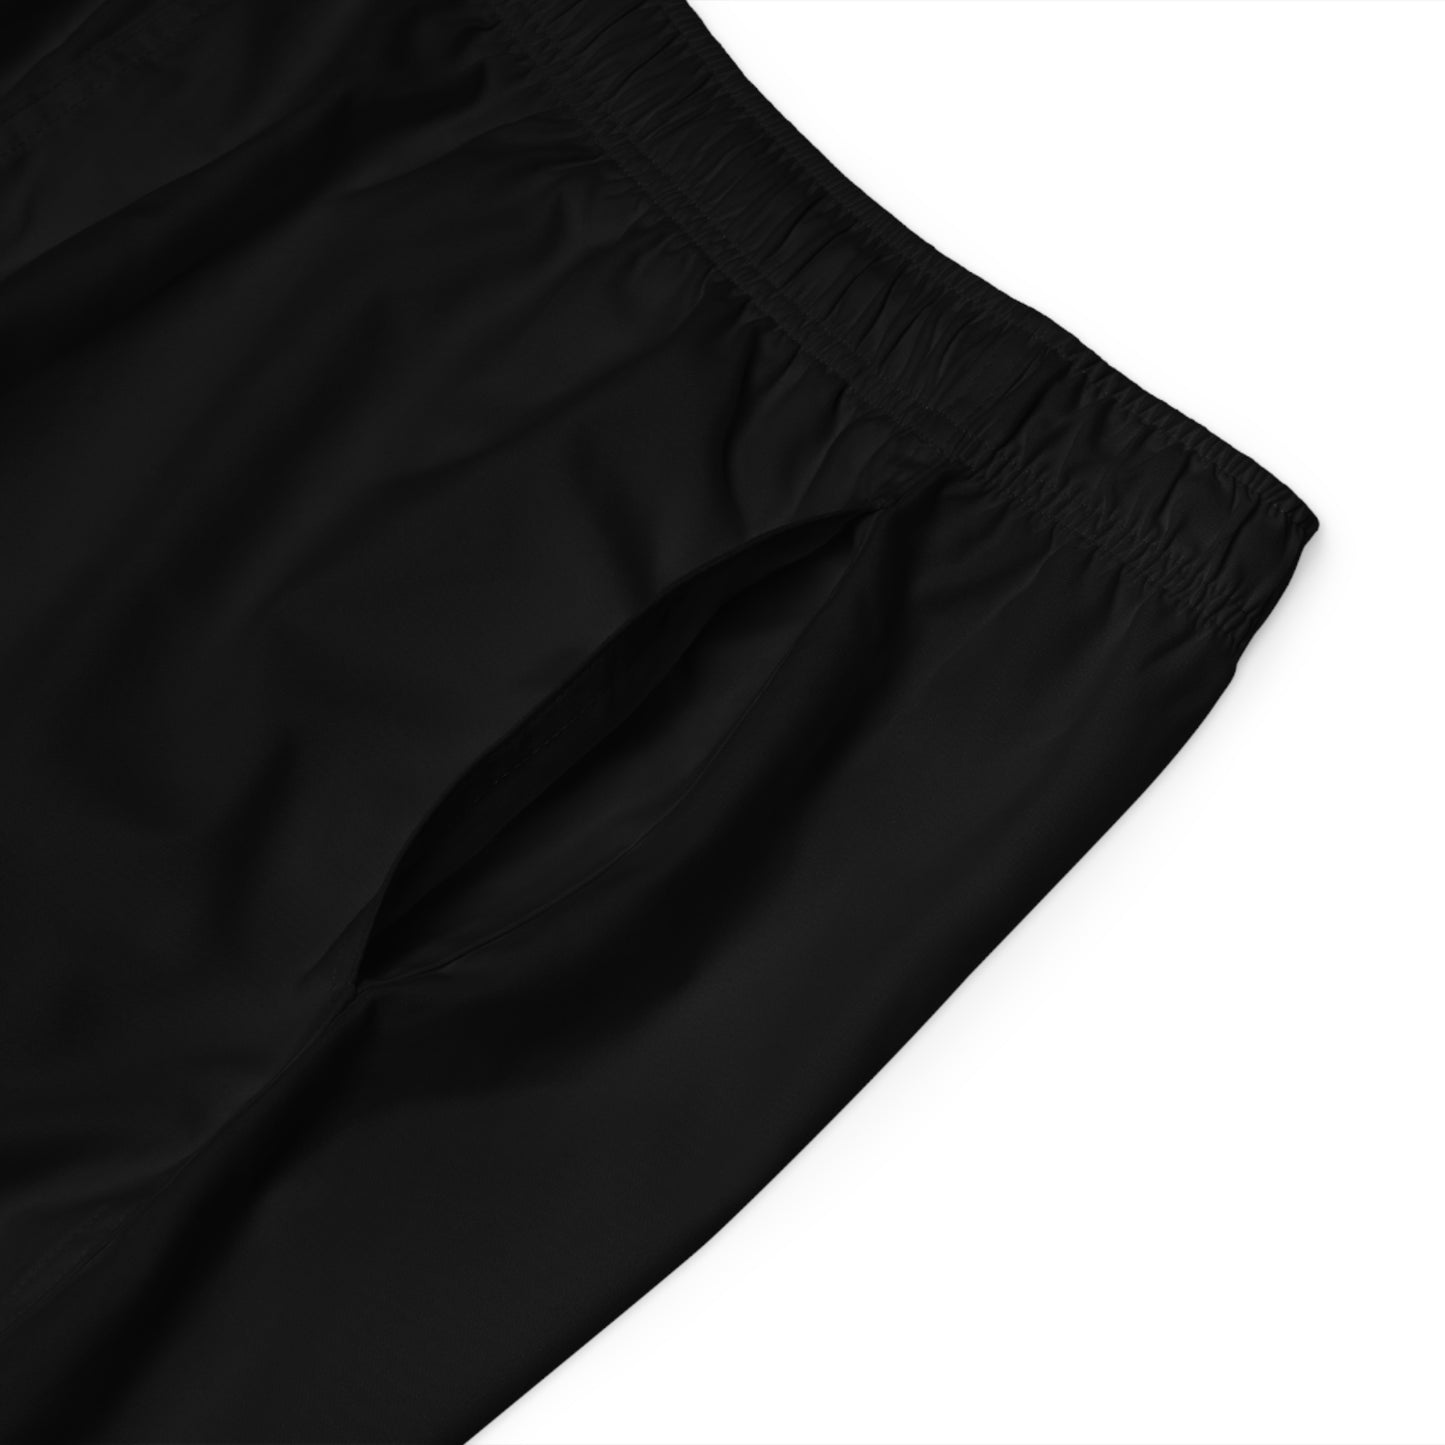 Supplication - Men's Board Shorts (AOP)